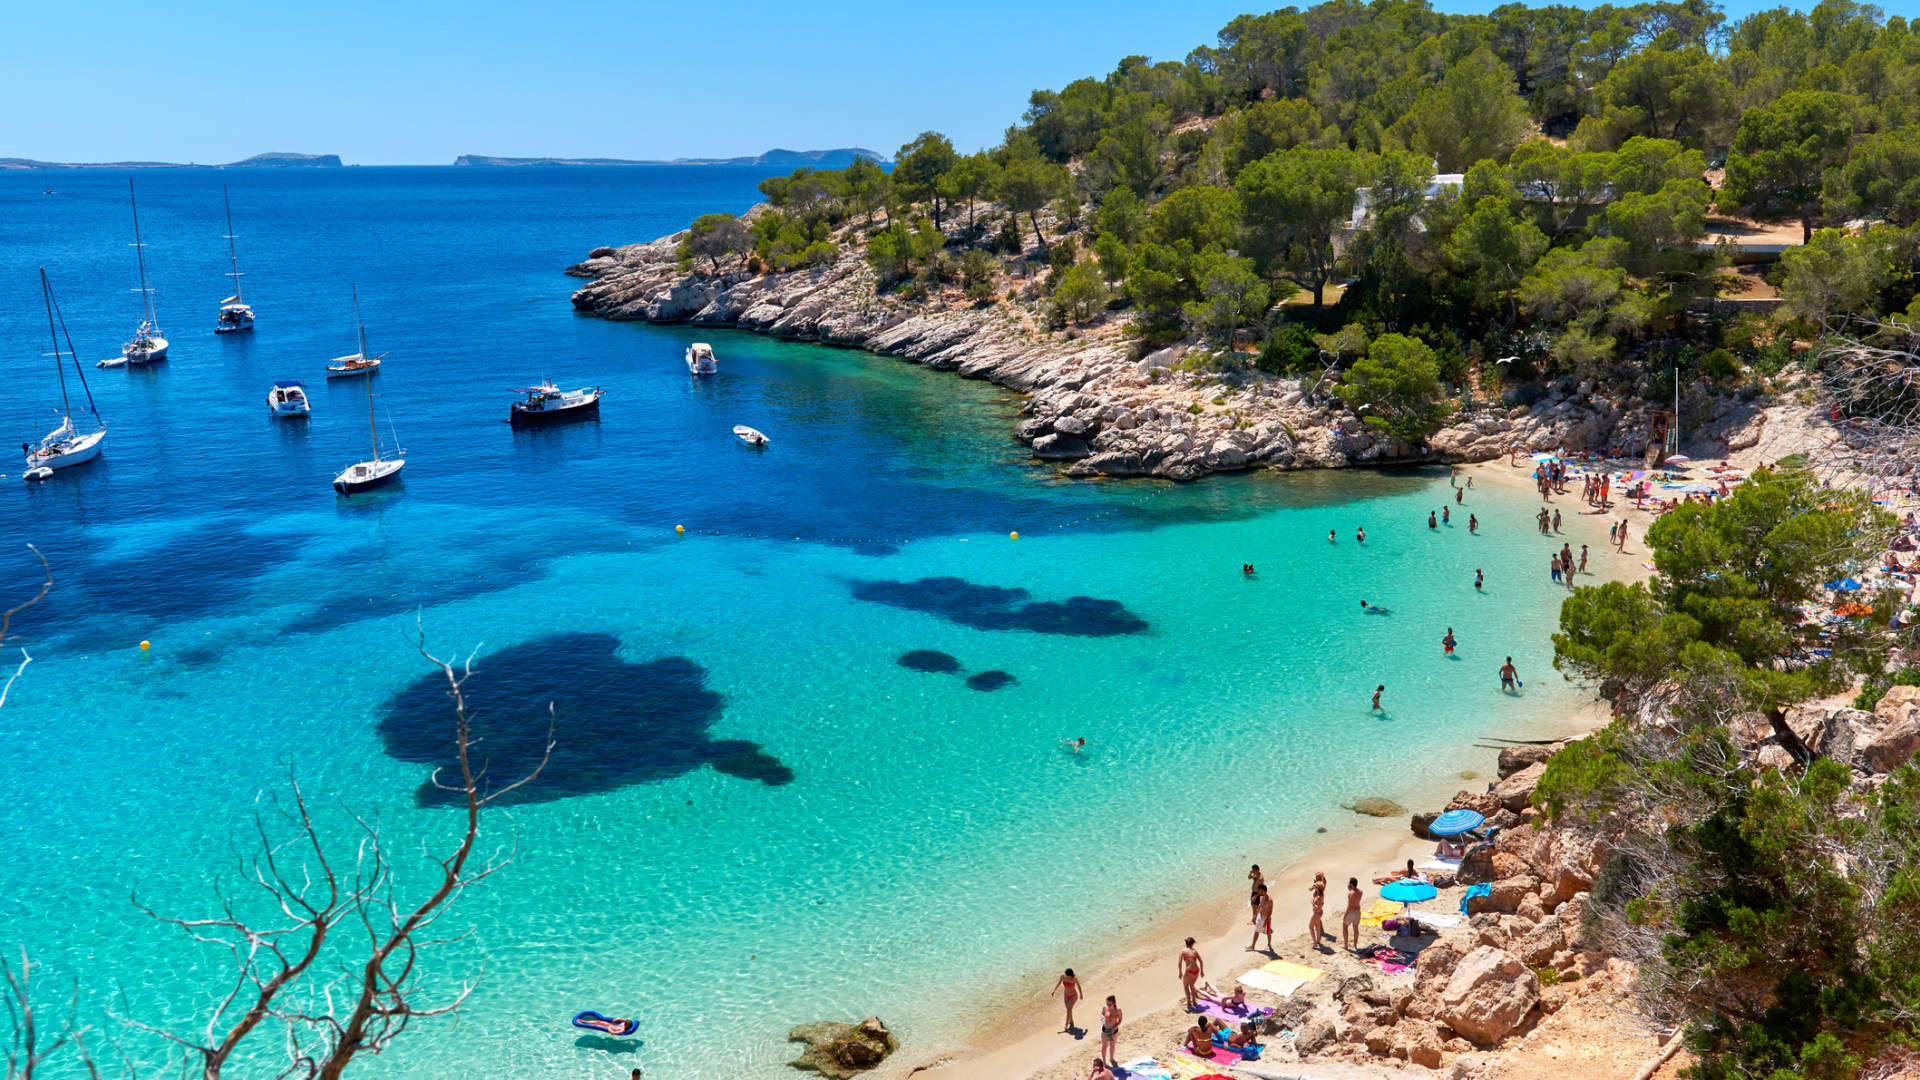 Beachgoers and boaters at Cala Salada, Ibiza.